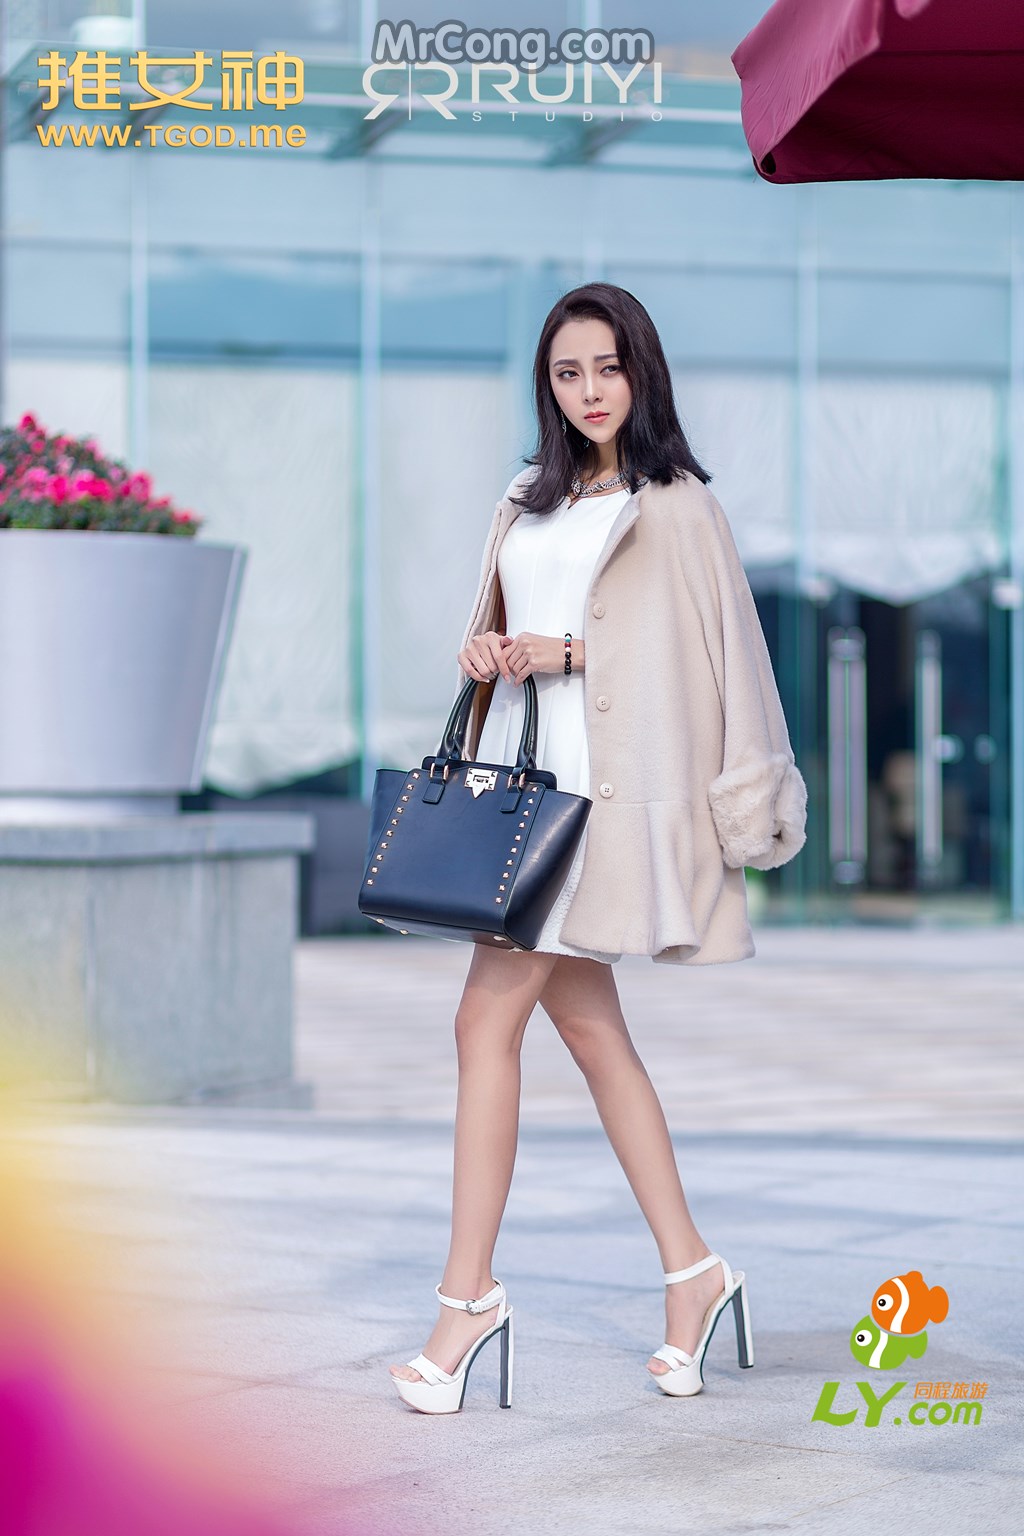 TGOD 2015-01-05: Model Liang Jing Ying (梁晶莹) (54 photos) photo 2-4